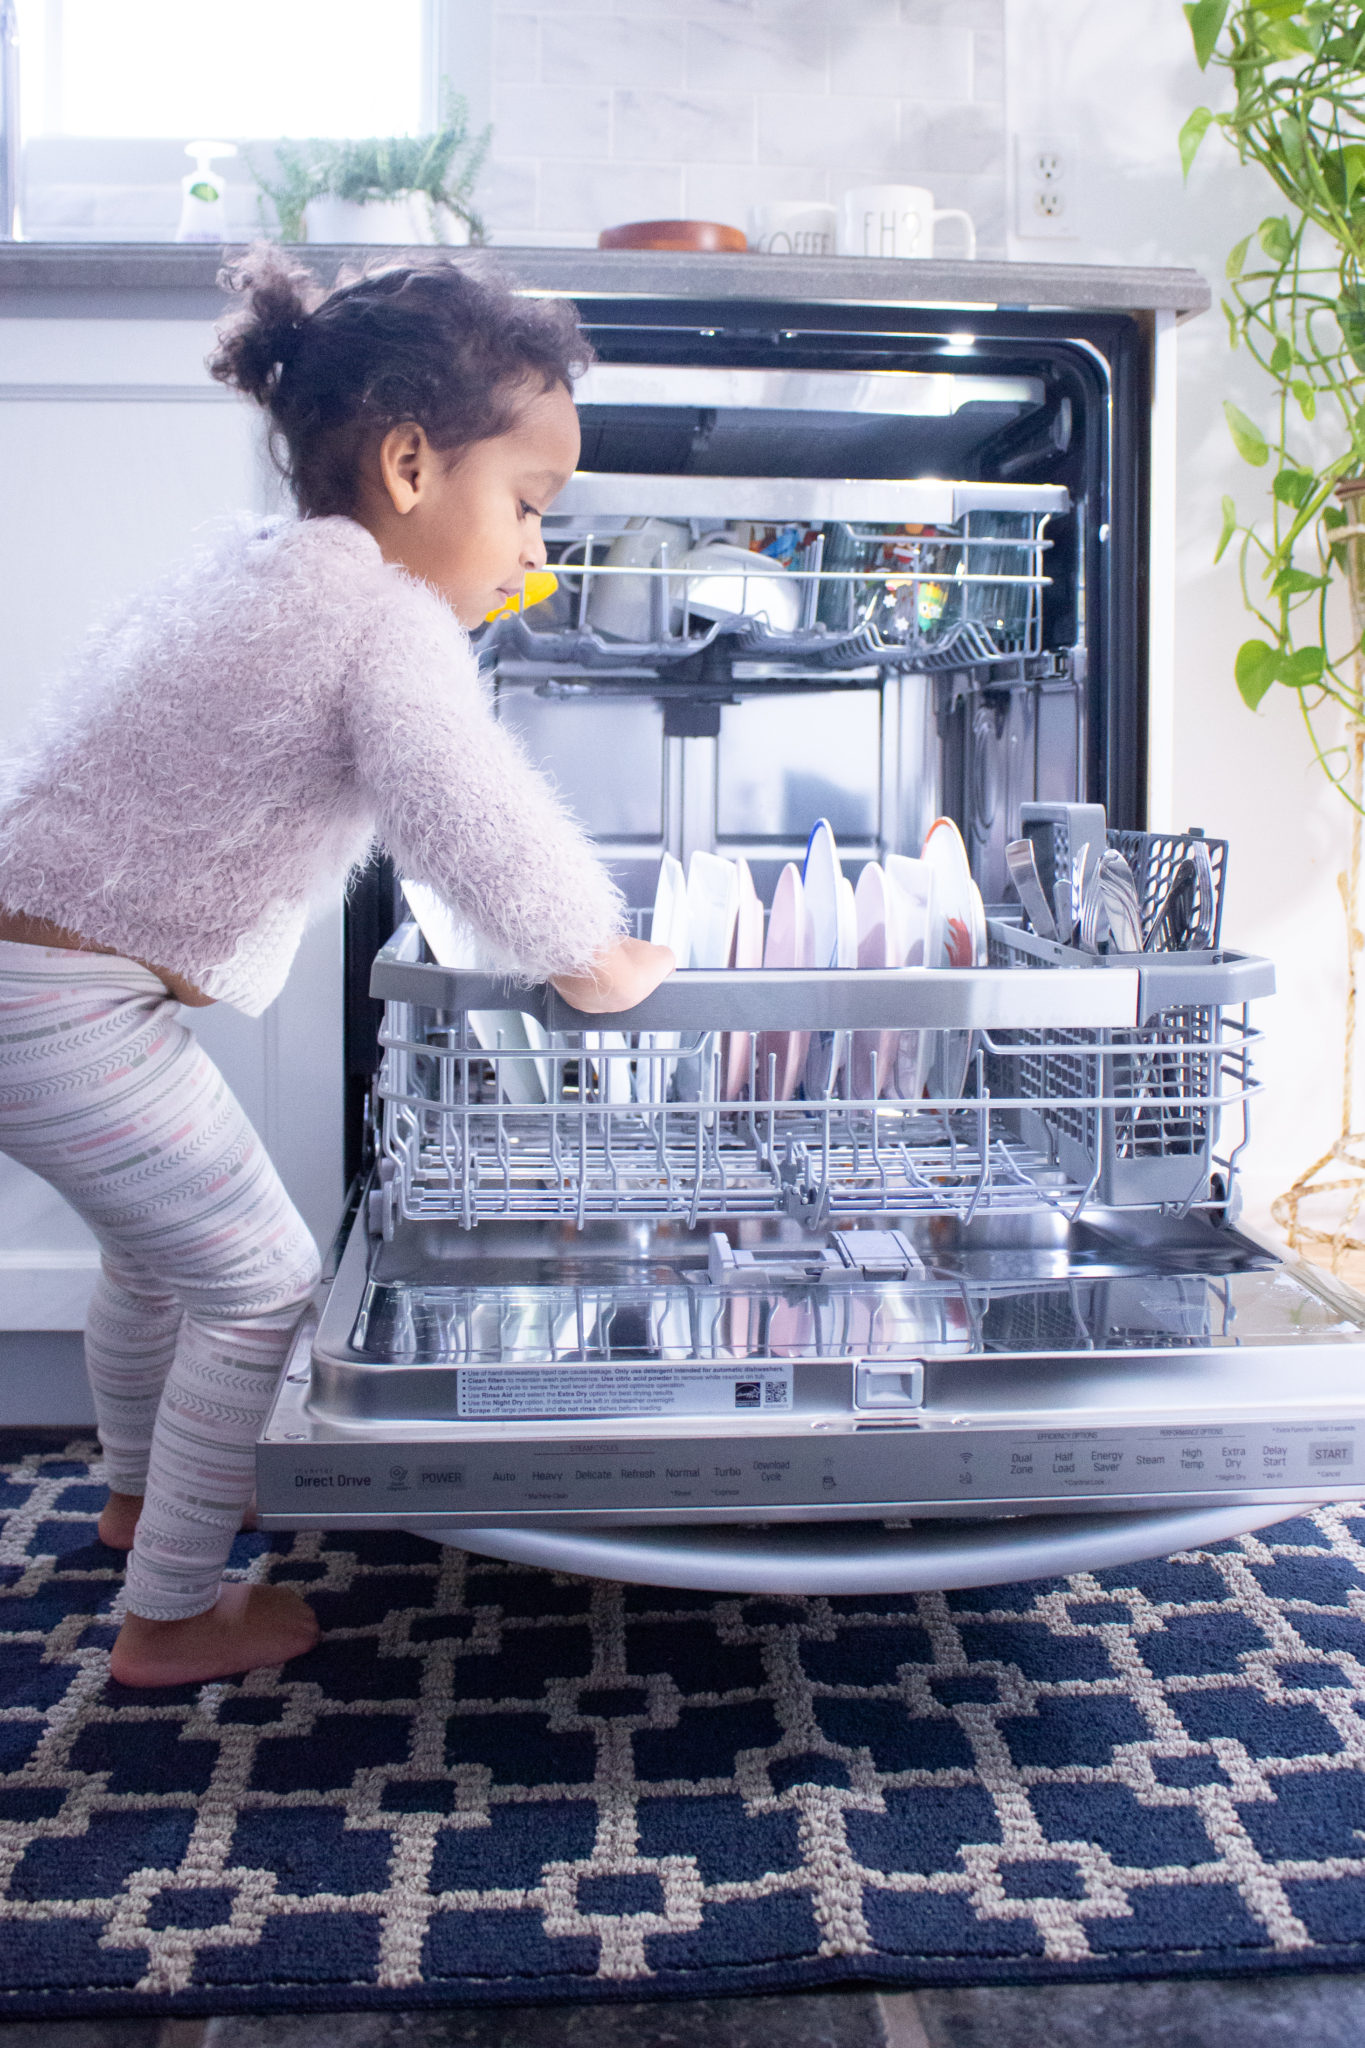 Easy Toddler Chores | LG QuadWash Steam Dishwasher Review